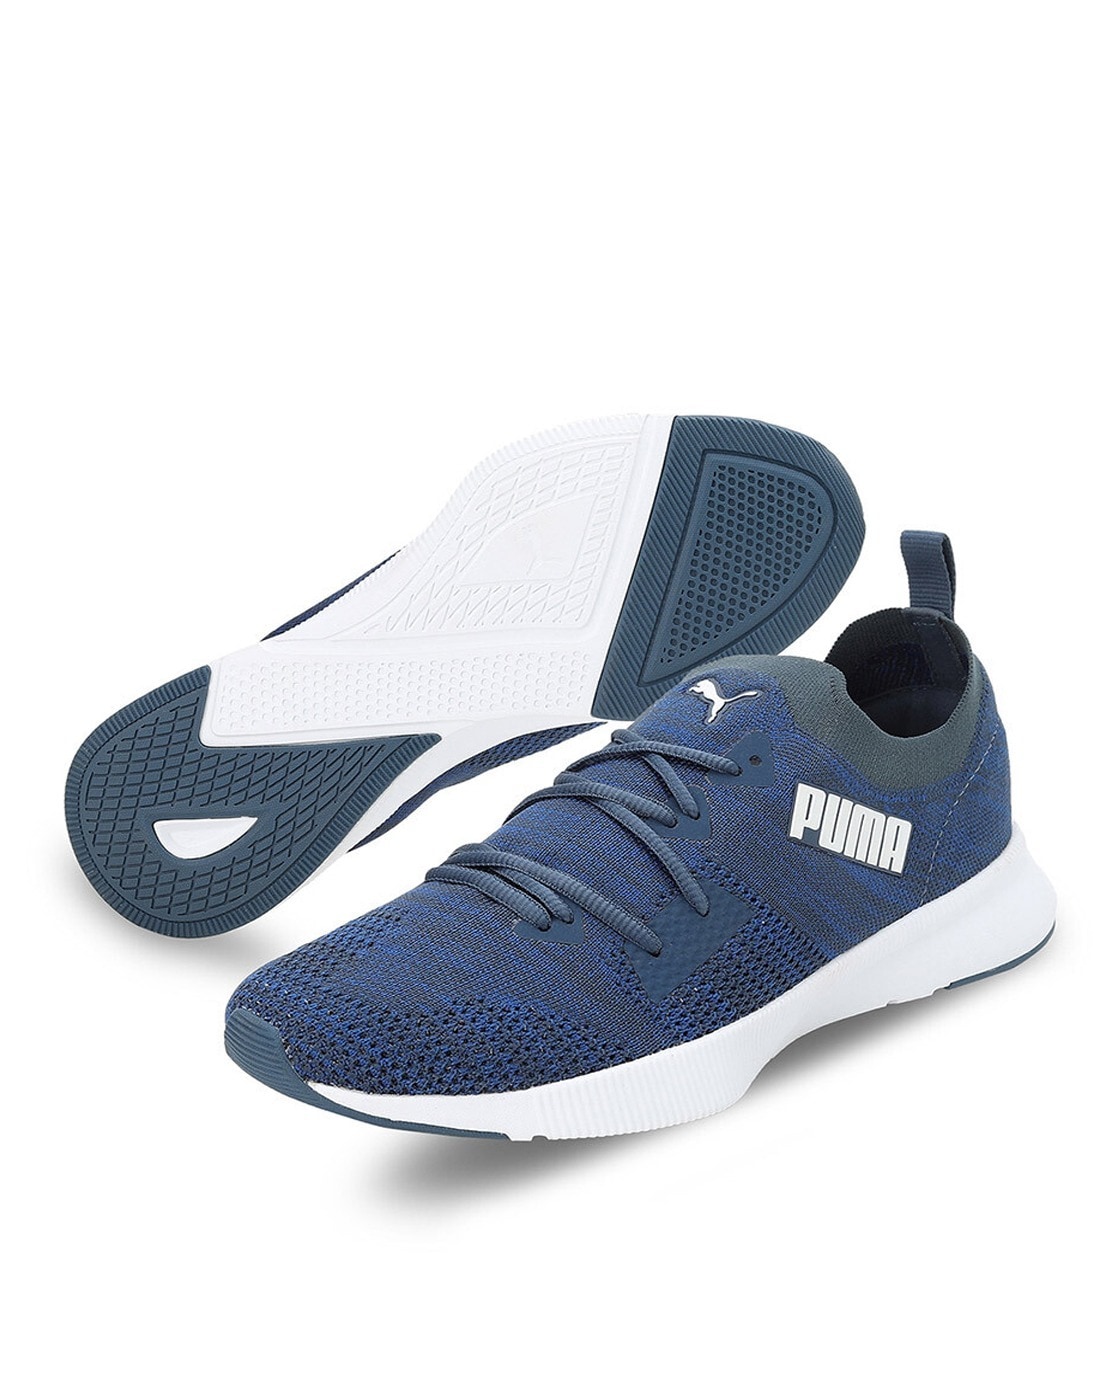 Puma Pacer Future Double Knit Running Shoe - Men's - Free Shipping | DSW